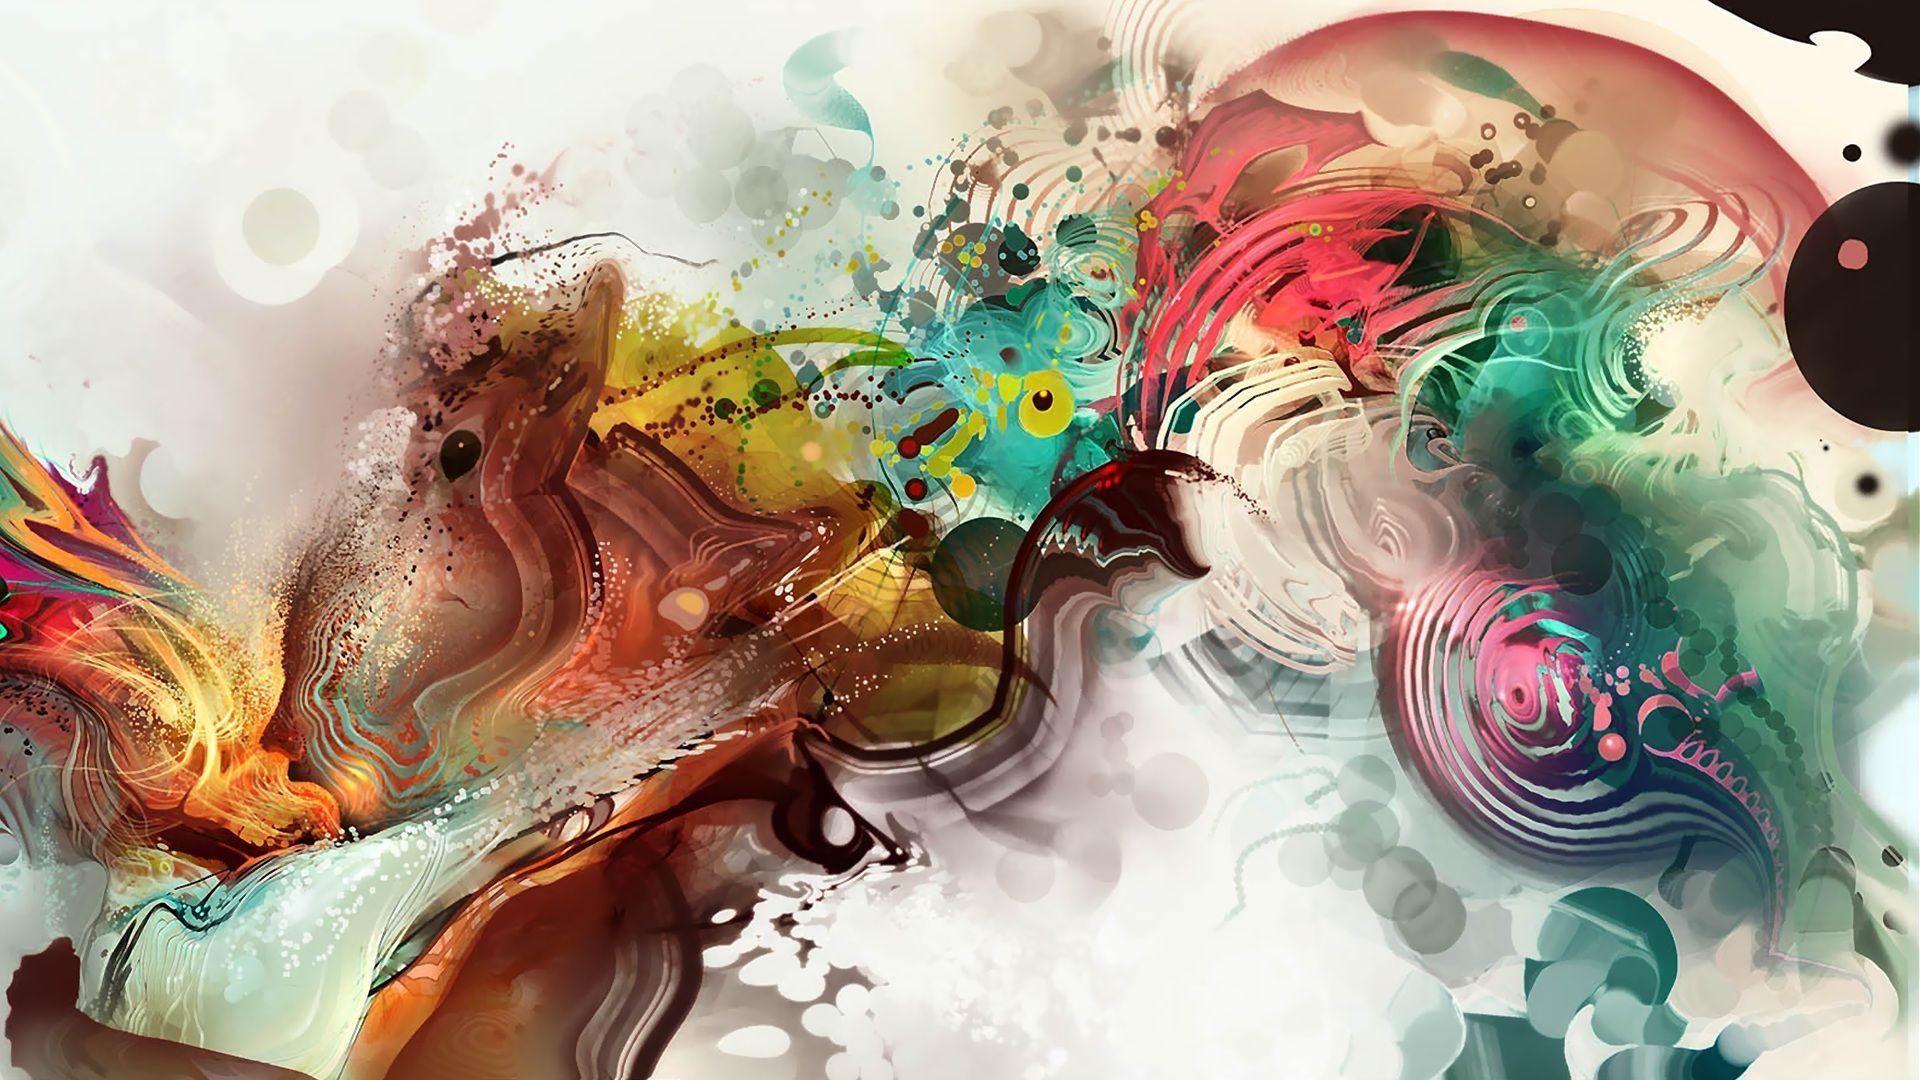 Android Jones abstract wallpaper. Art. Artistic